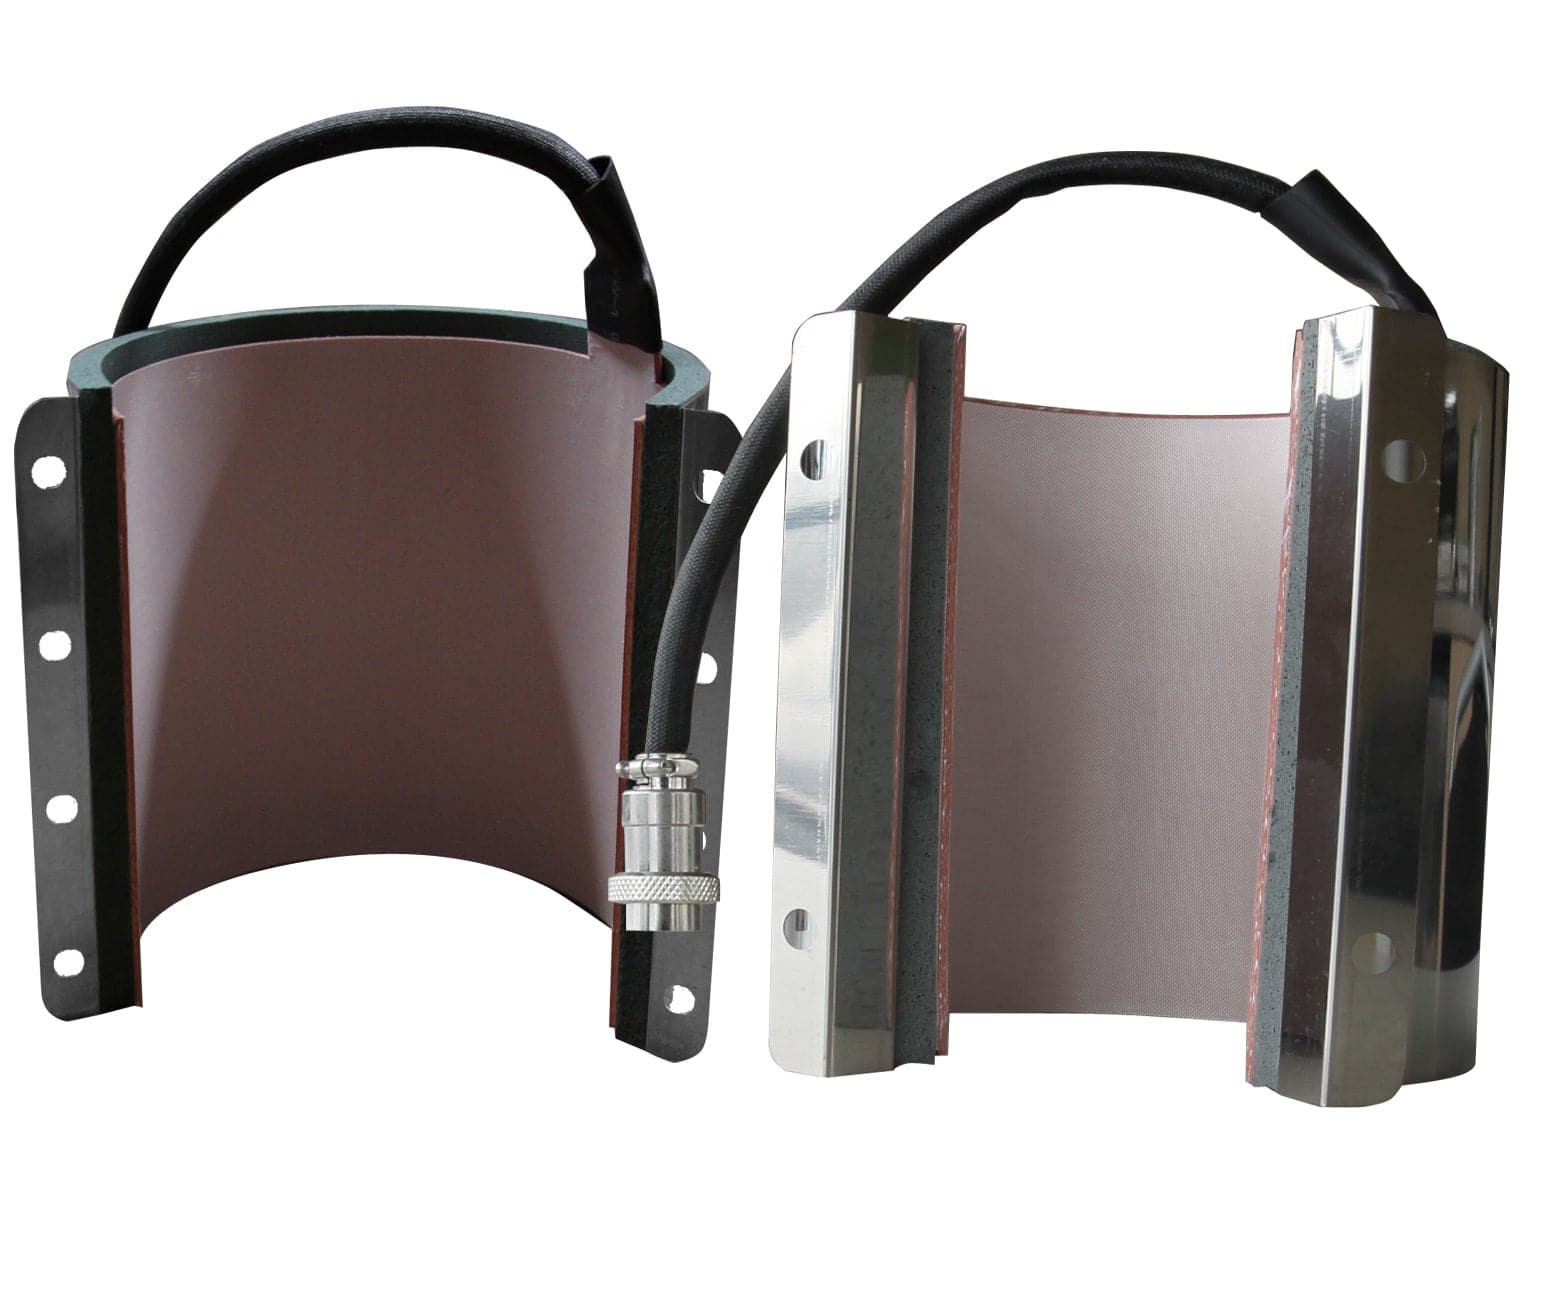 Replacement Mug Element for Joto Mug Press 5 Stations - Joto Imaging Supplies US